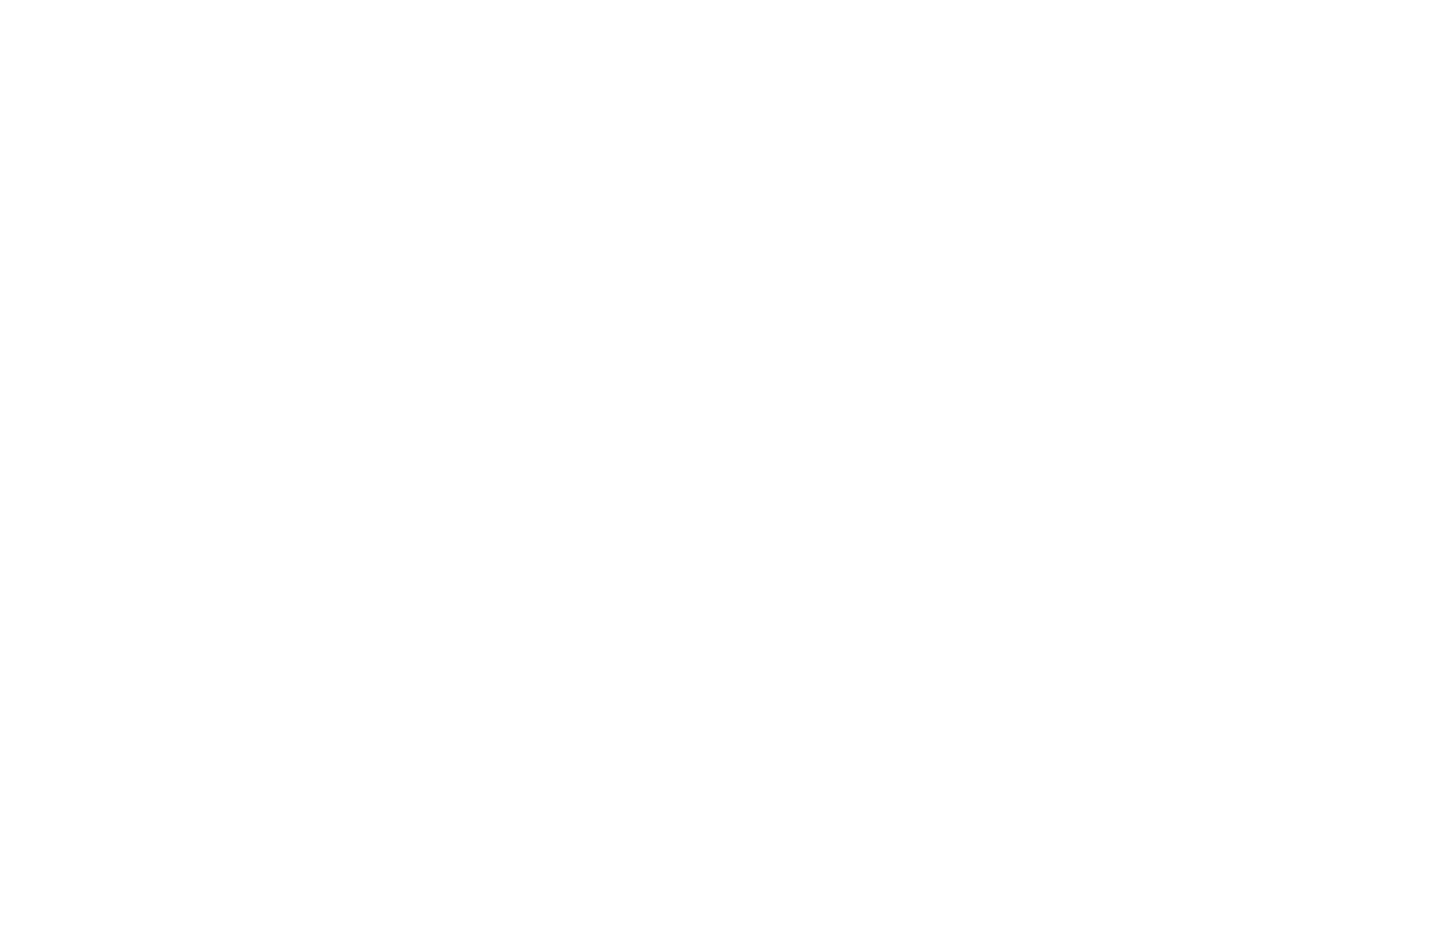 Sasad Resort logo